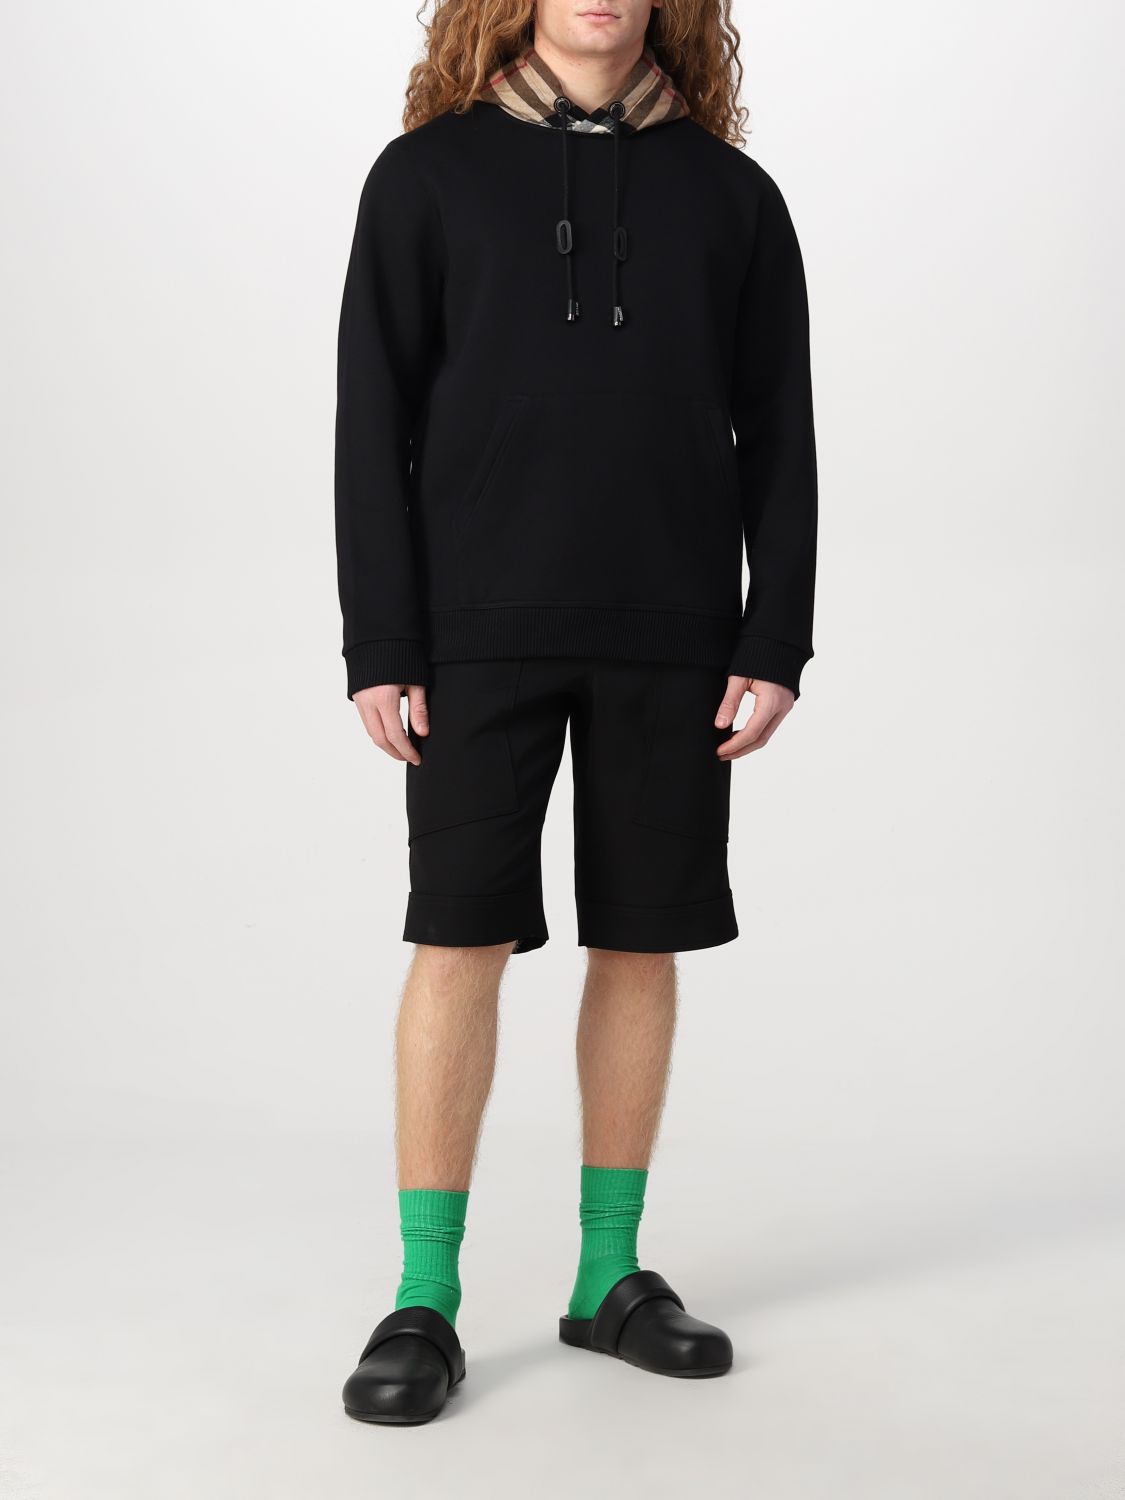 Burberry Samuel cotton blend hoodie